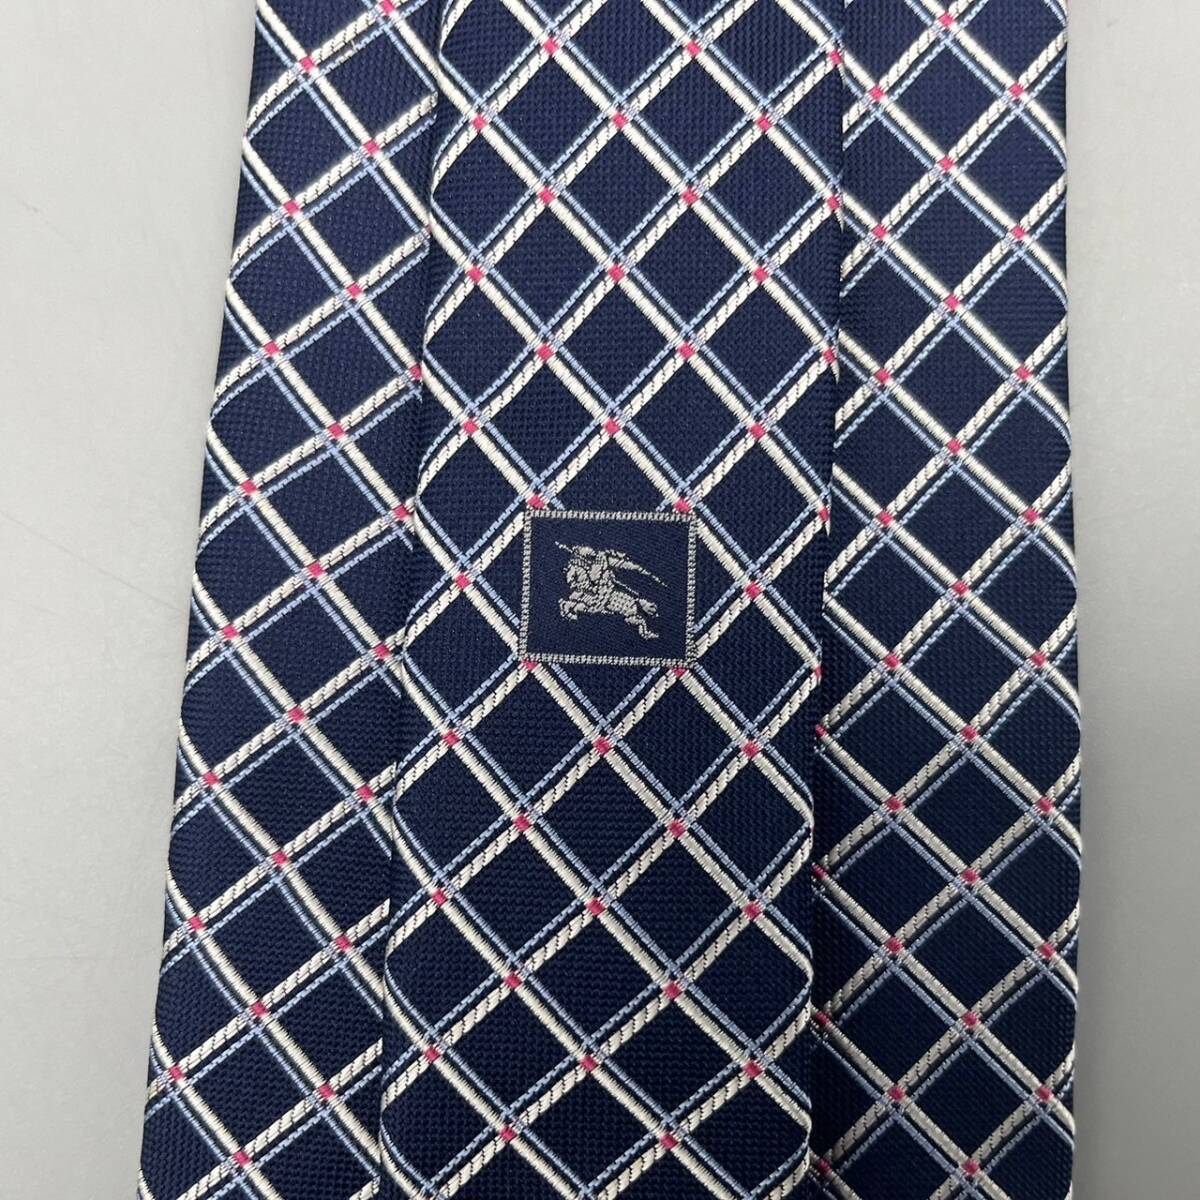 BURBERRY Burberry галстук шелк 100% шелк 